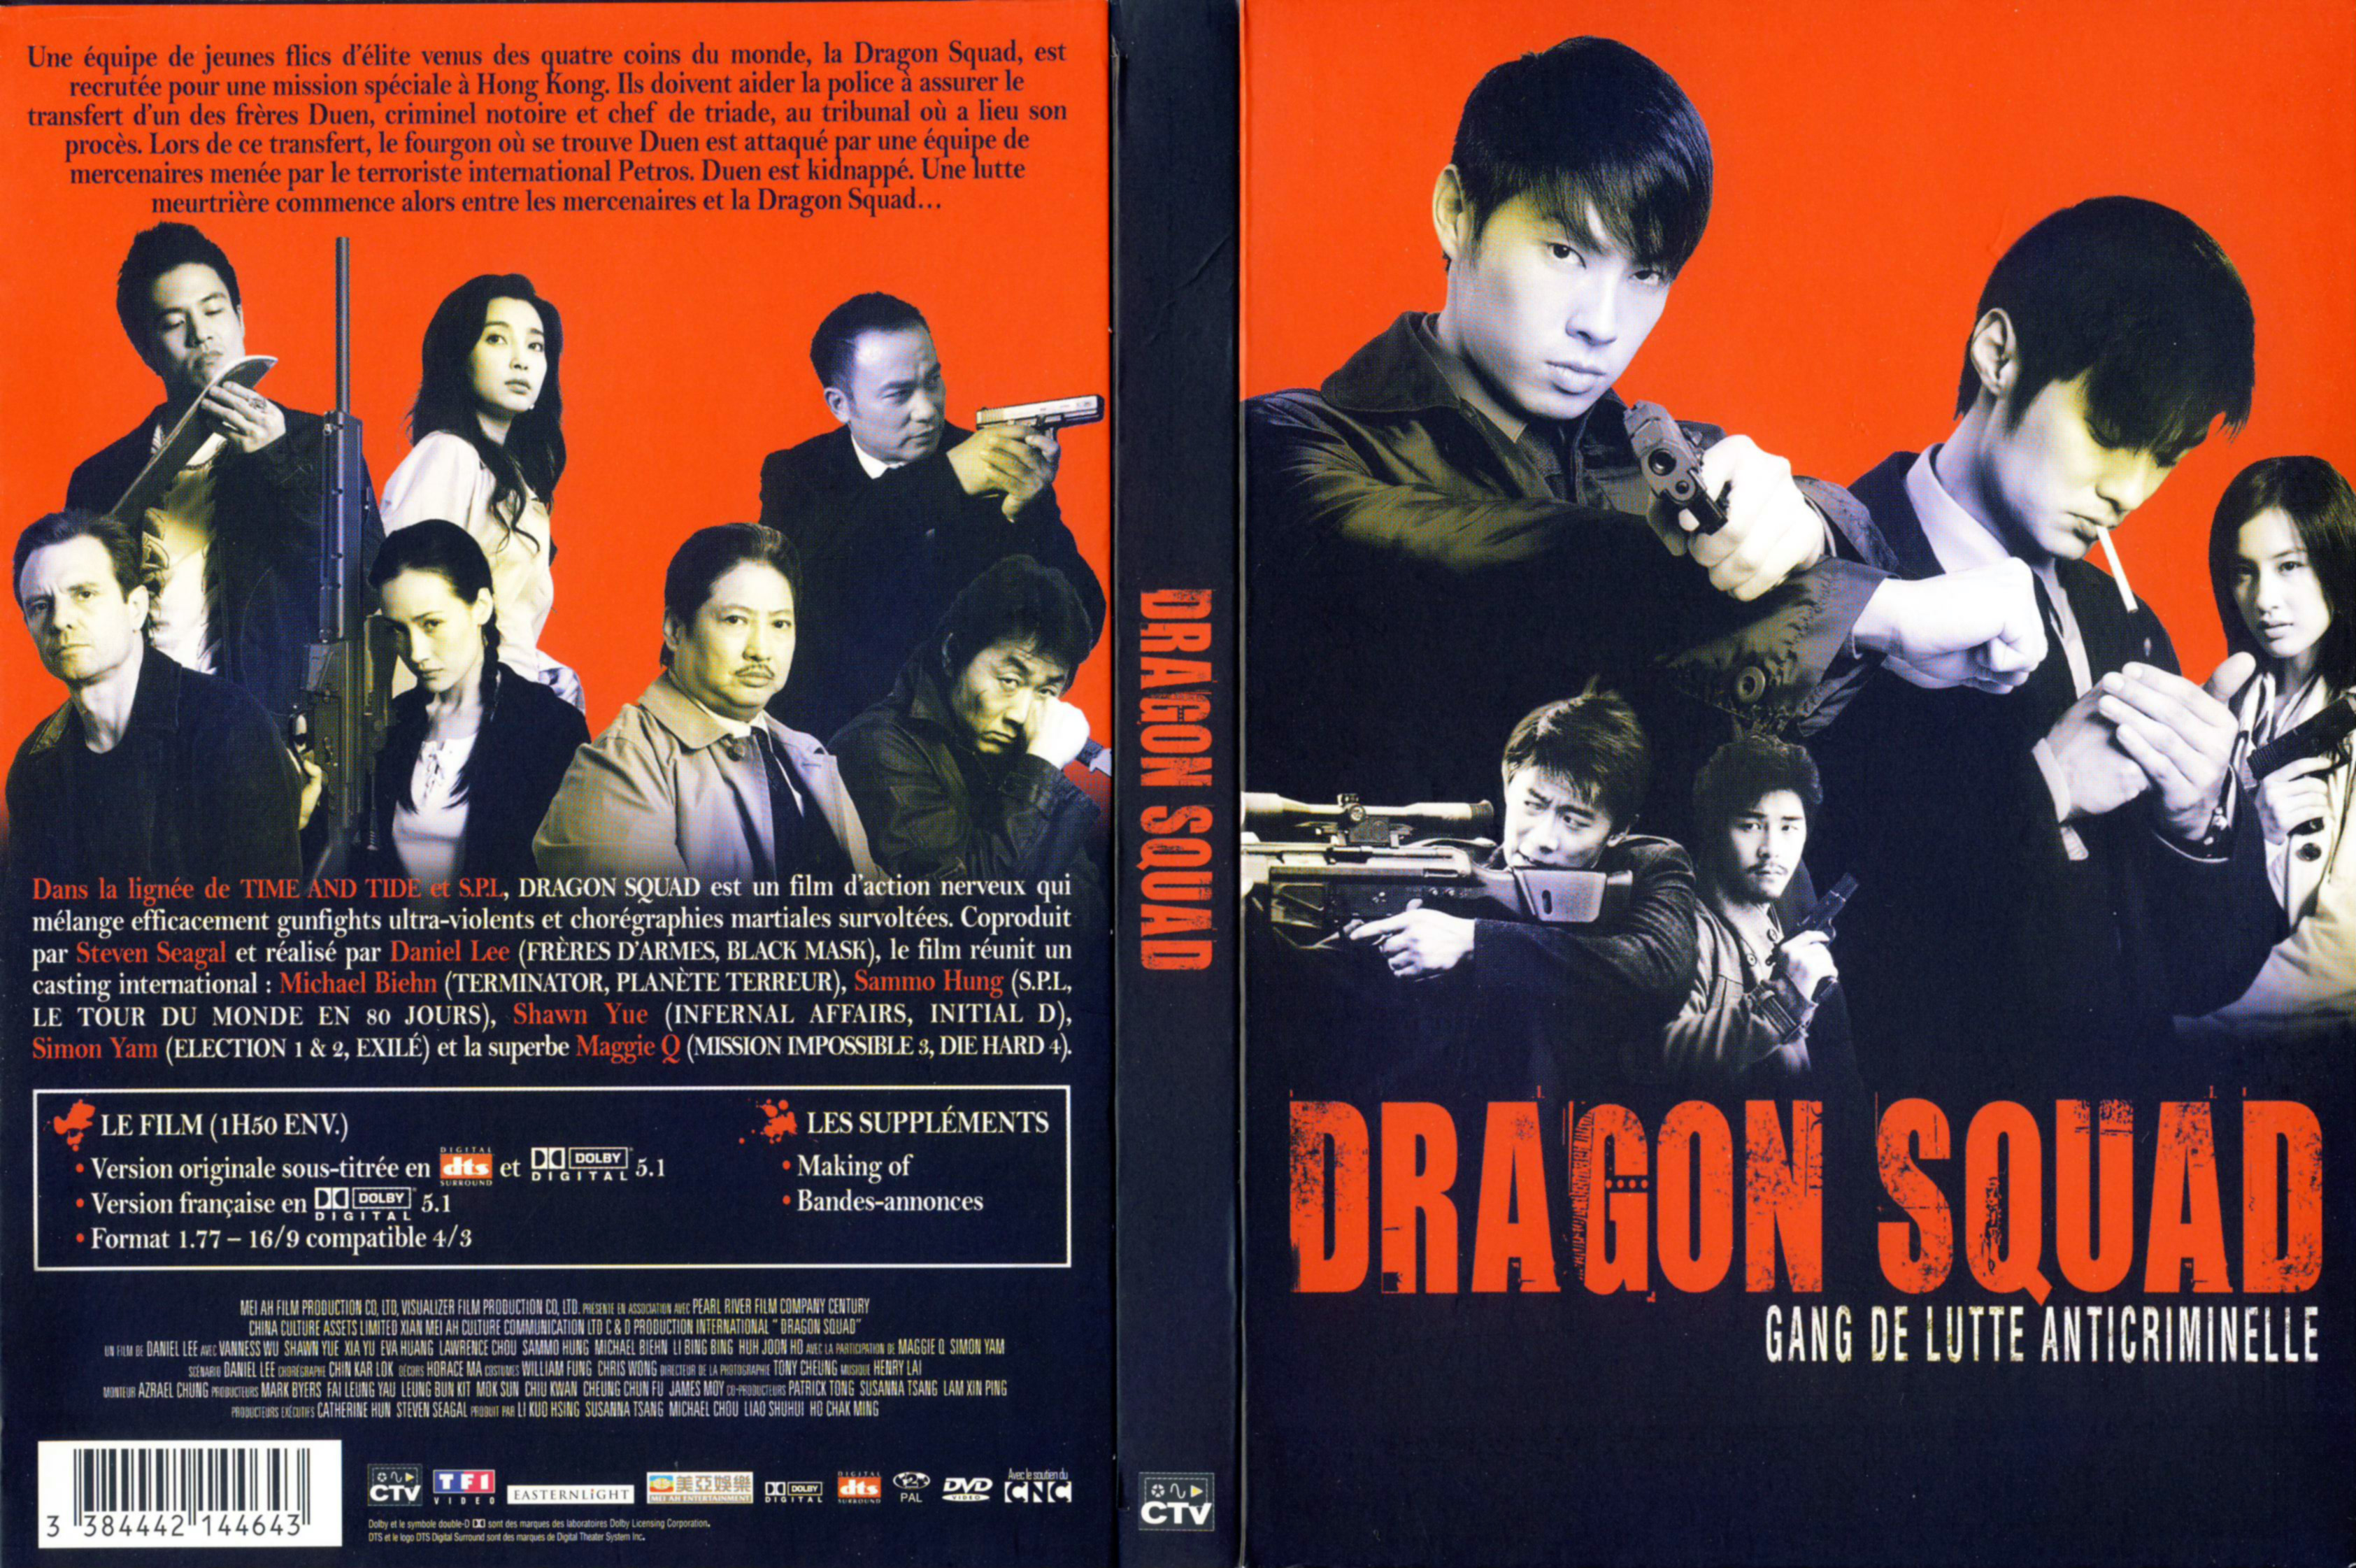 Jaquette DVD Dragon squad